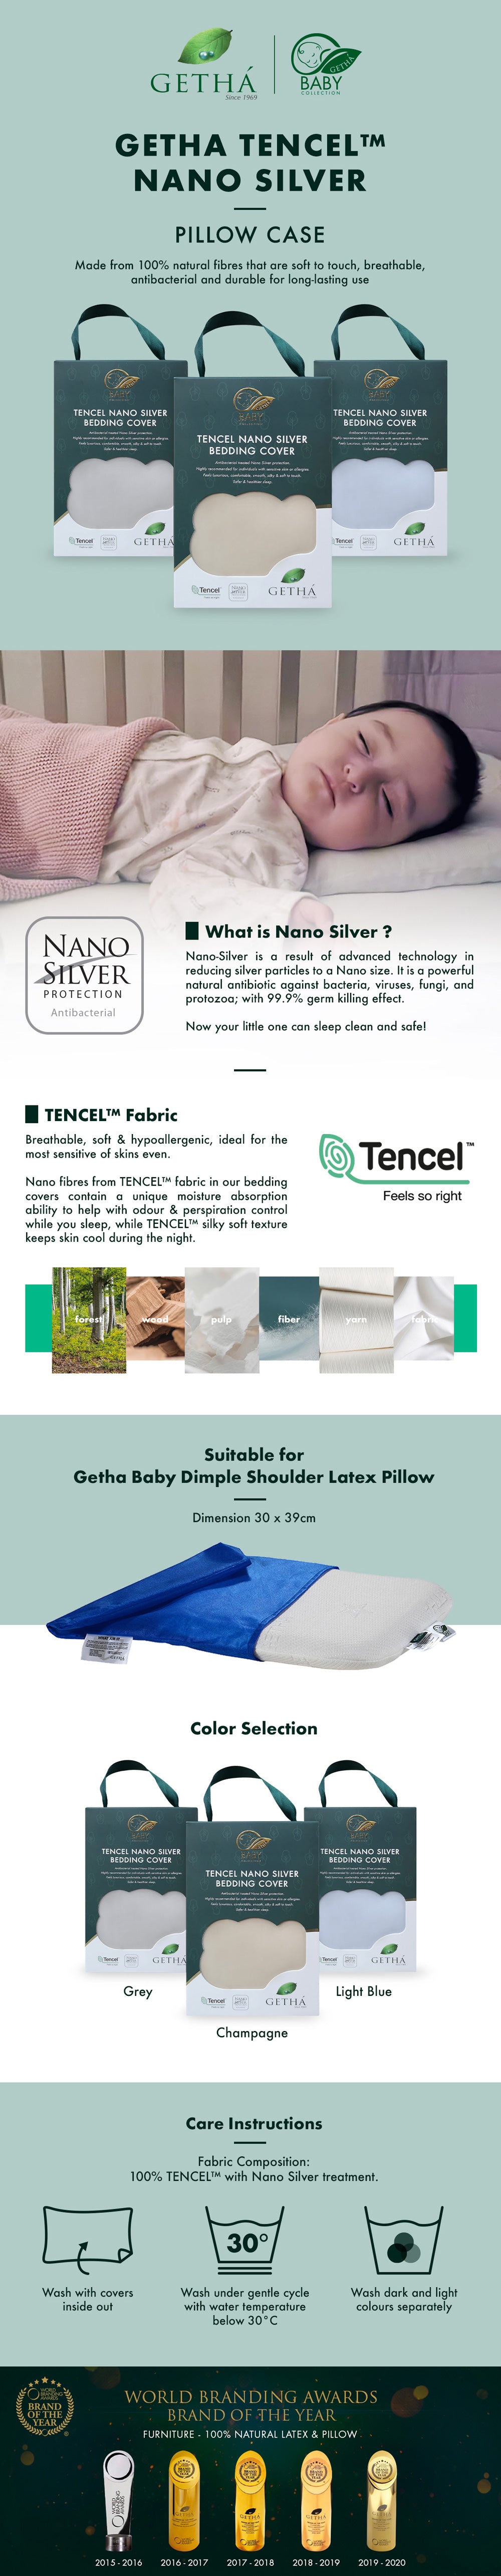 Getha Tencel Nano Silver Pillow Case – Baby Dimple Shoulder Latex Pillow